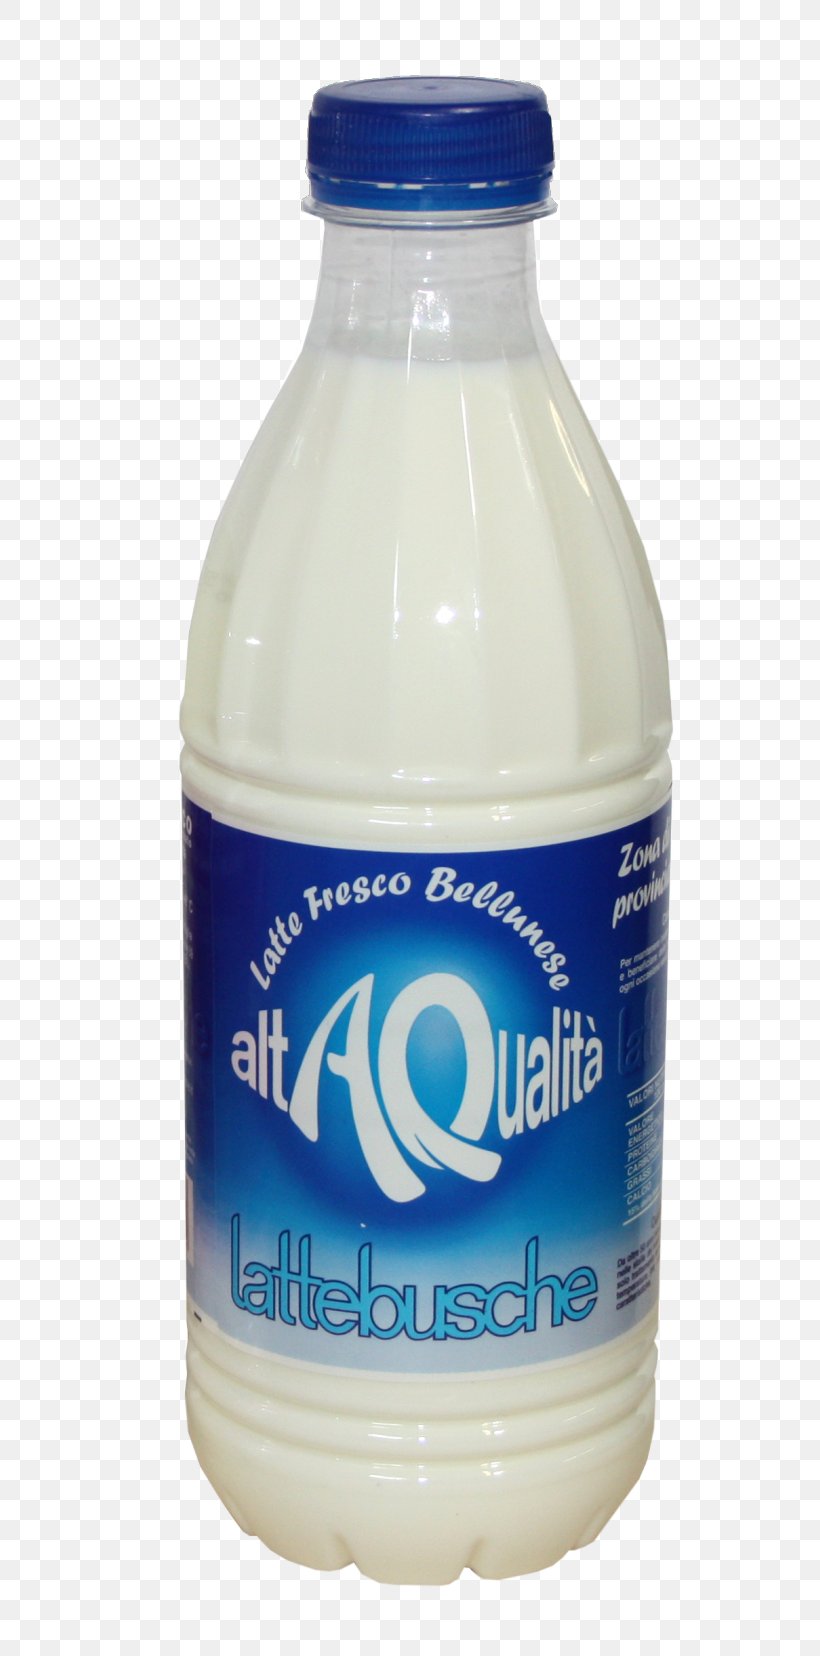 Raw Milk Lattebusche Dairy Products Plastic Bottle, PNG, 640x1656px, Milk, Bottle, Budynek Inwentarski, Commodity Chain, Dairy Download Free